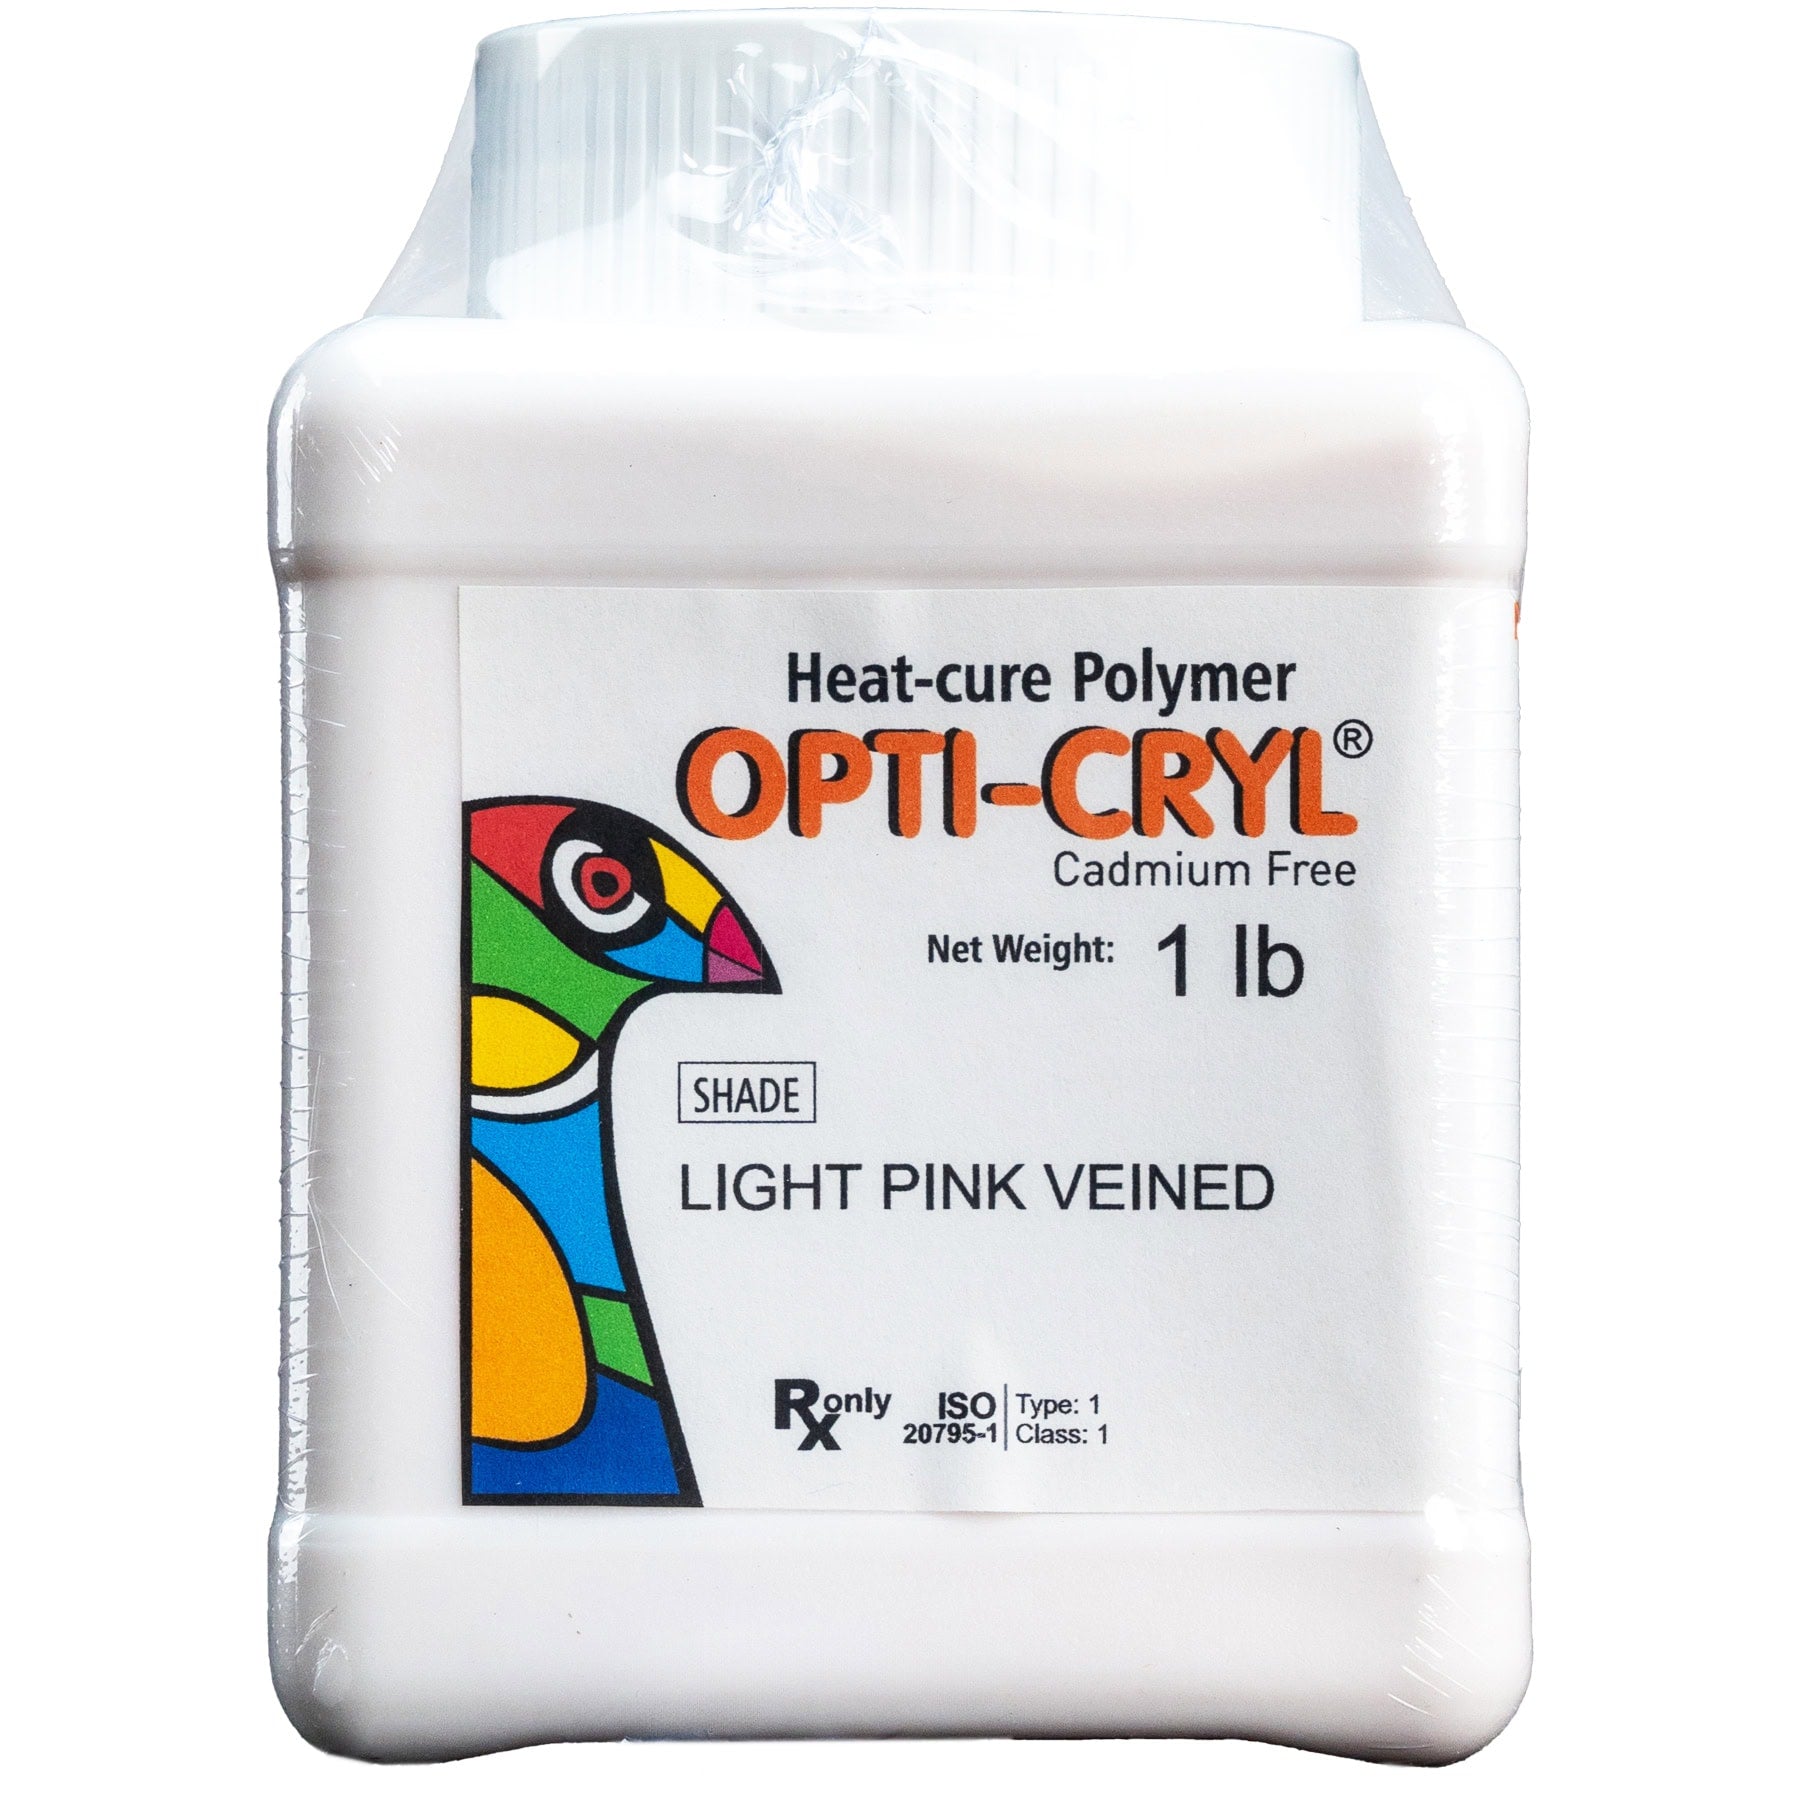 OPTI-CRYL Heat Curing Acrylic Resin 500gr/1 lb, Light Pink Veined.